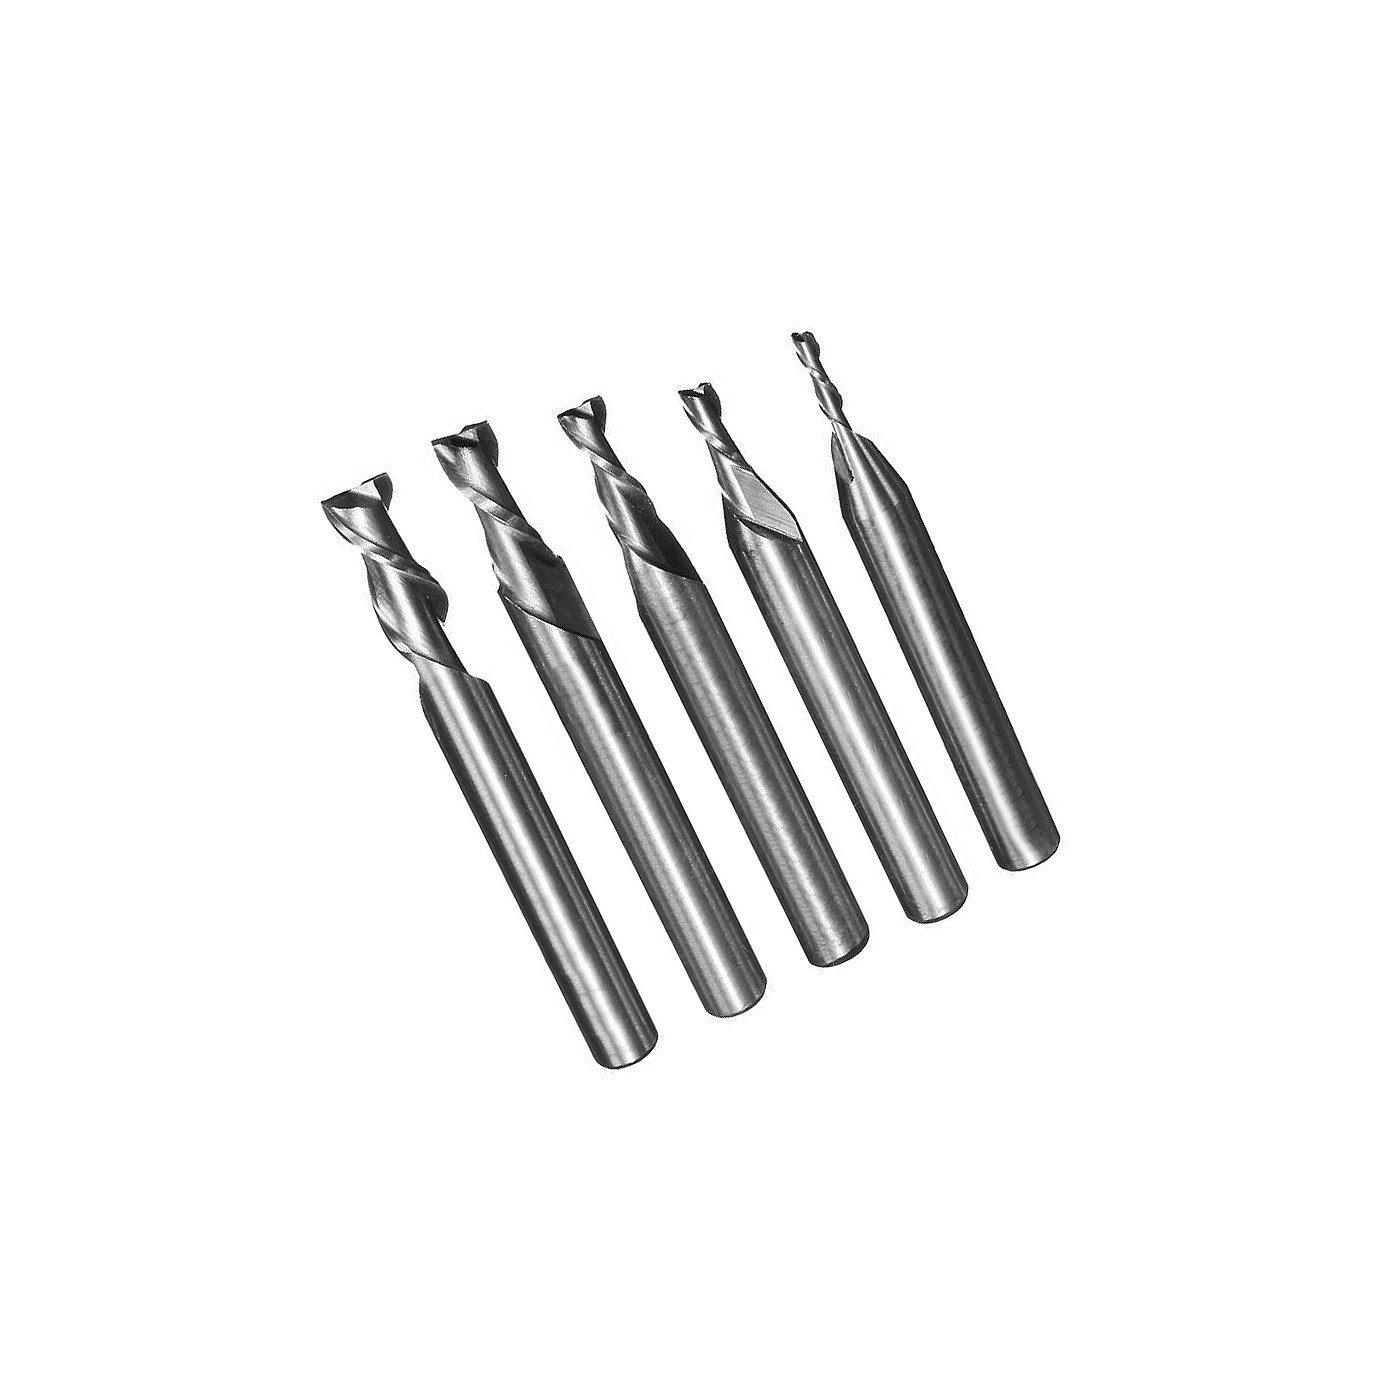 Set HSS milling cutters, 2 flutes (5 pcs: 2-6 mm)